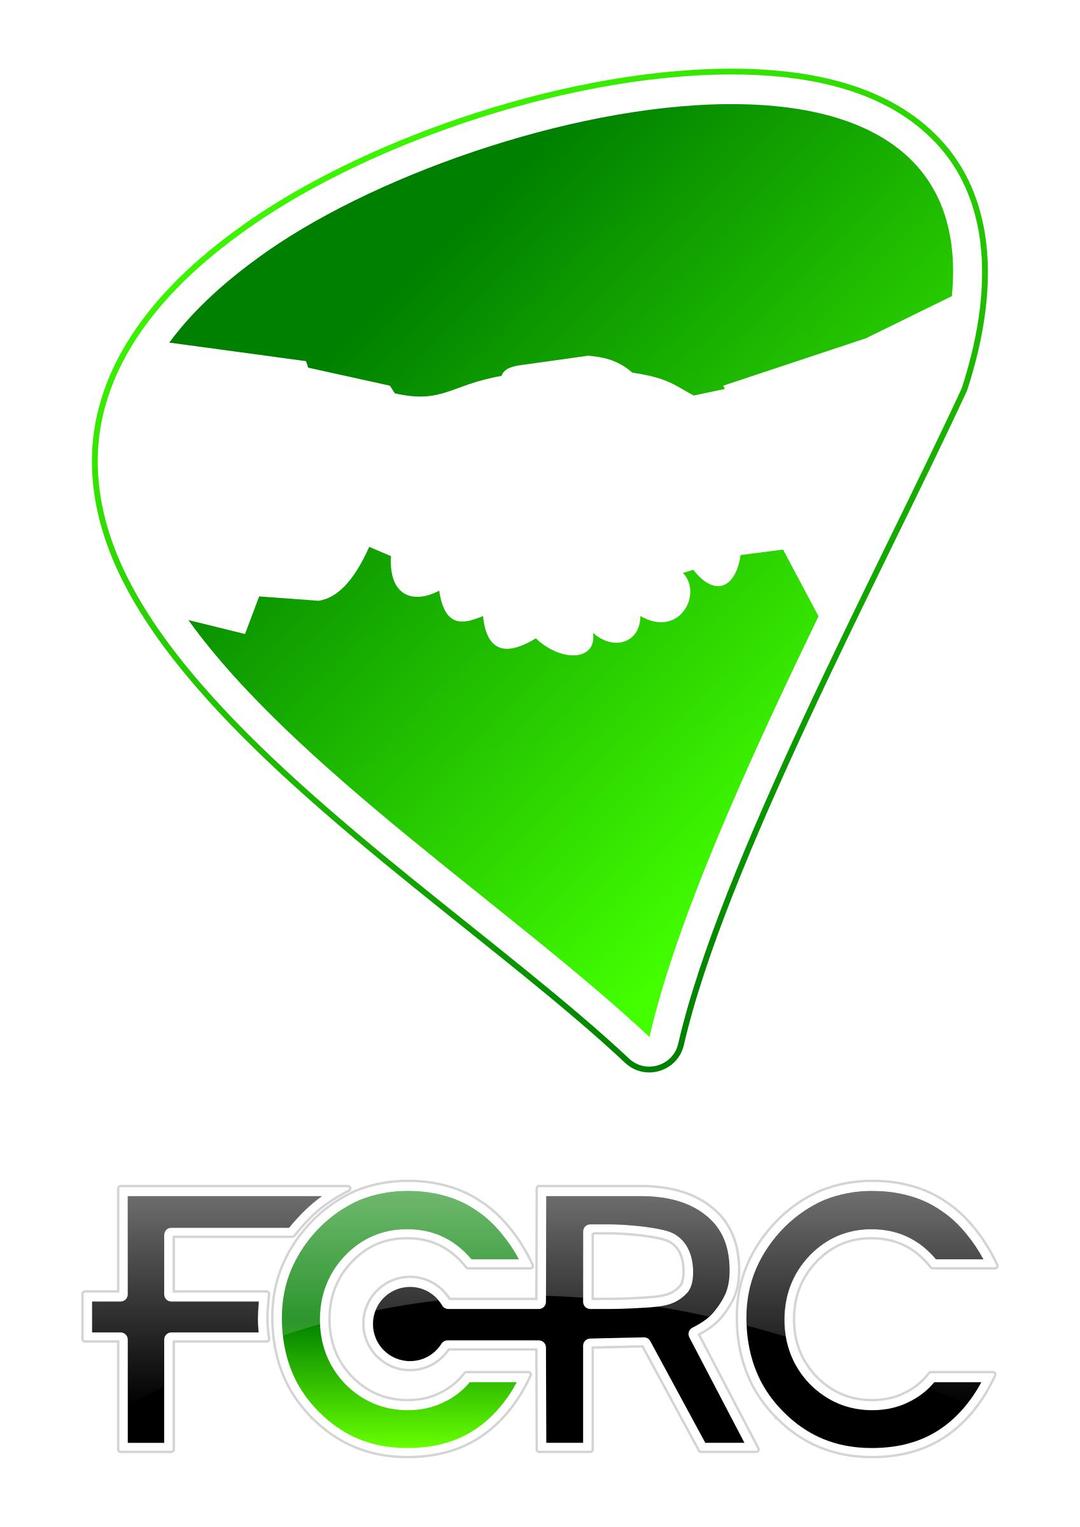 FCRC logo handshake 2 png transparent